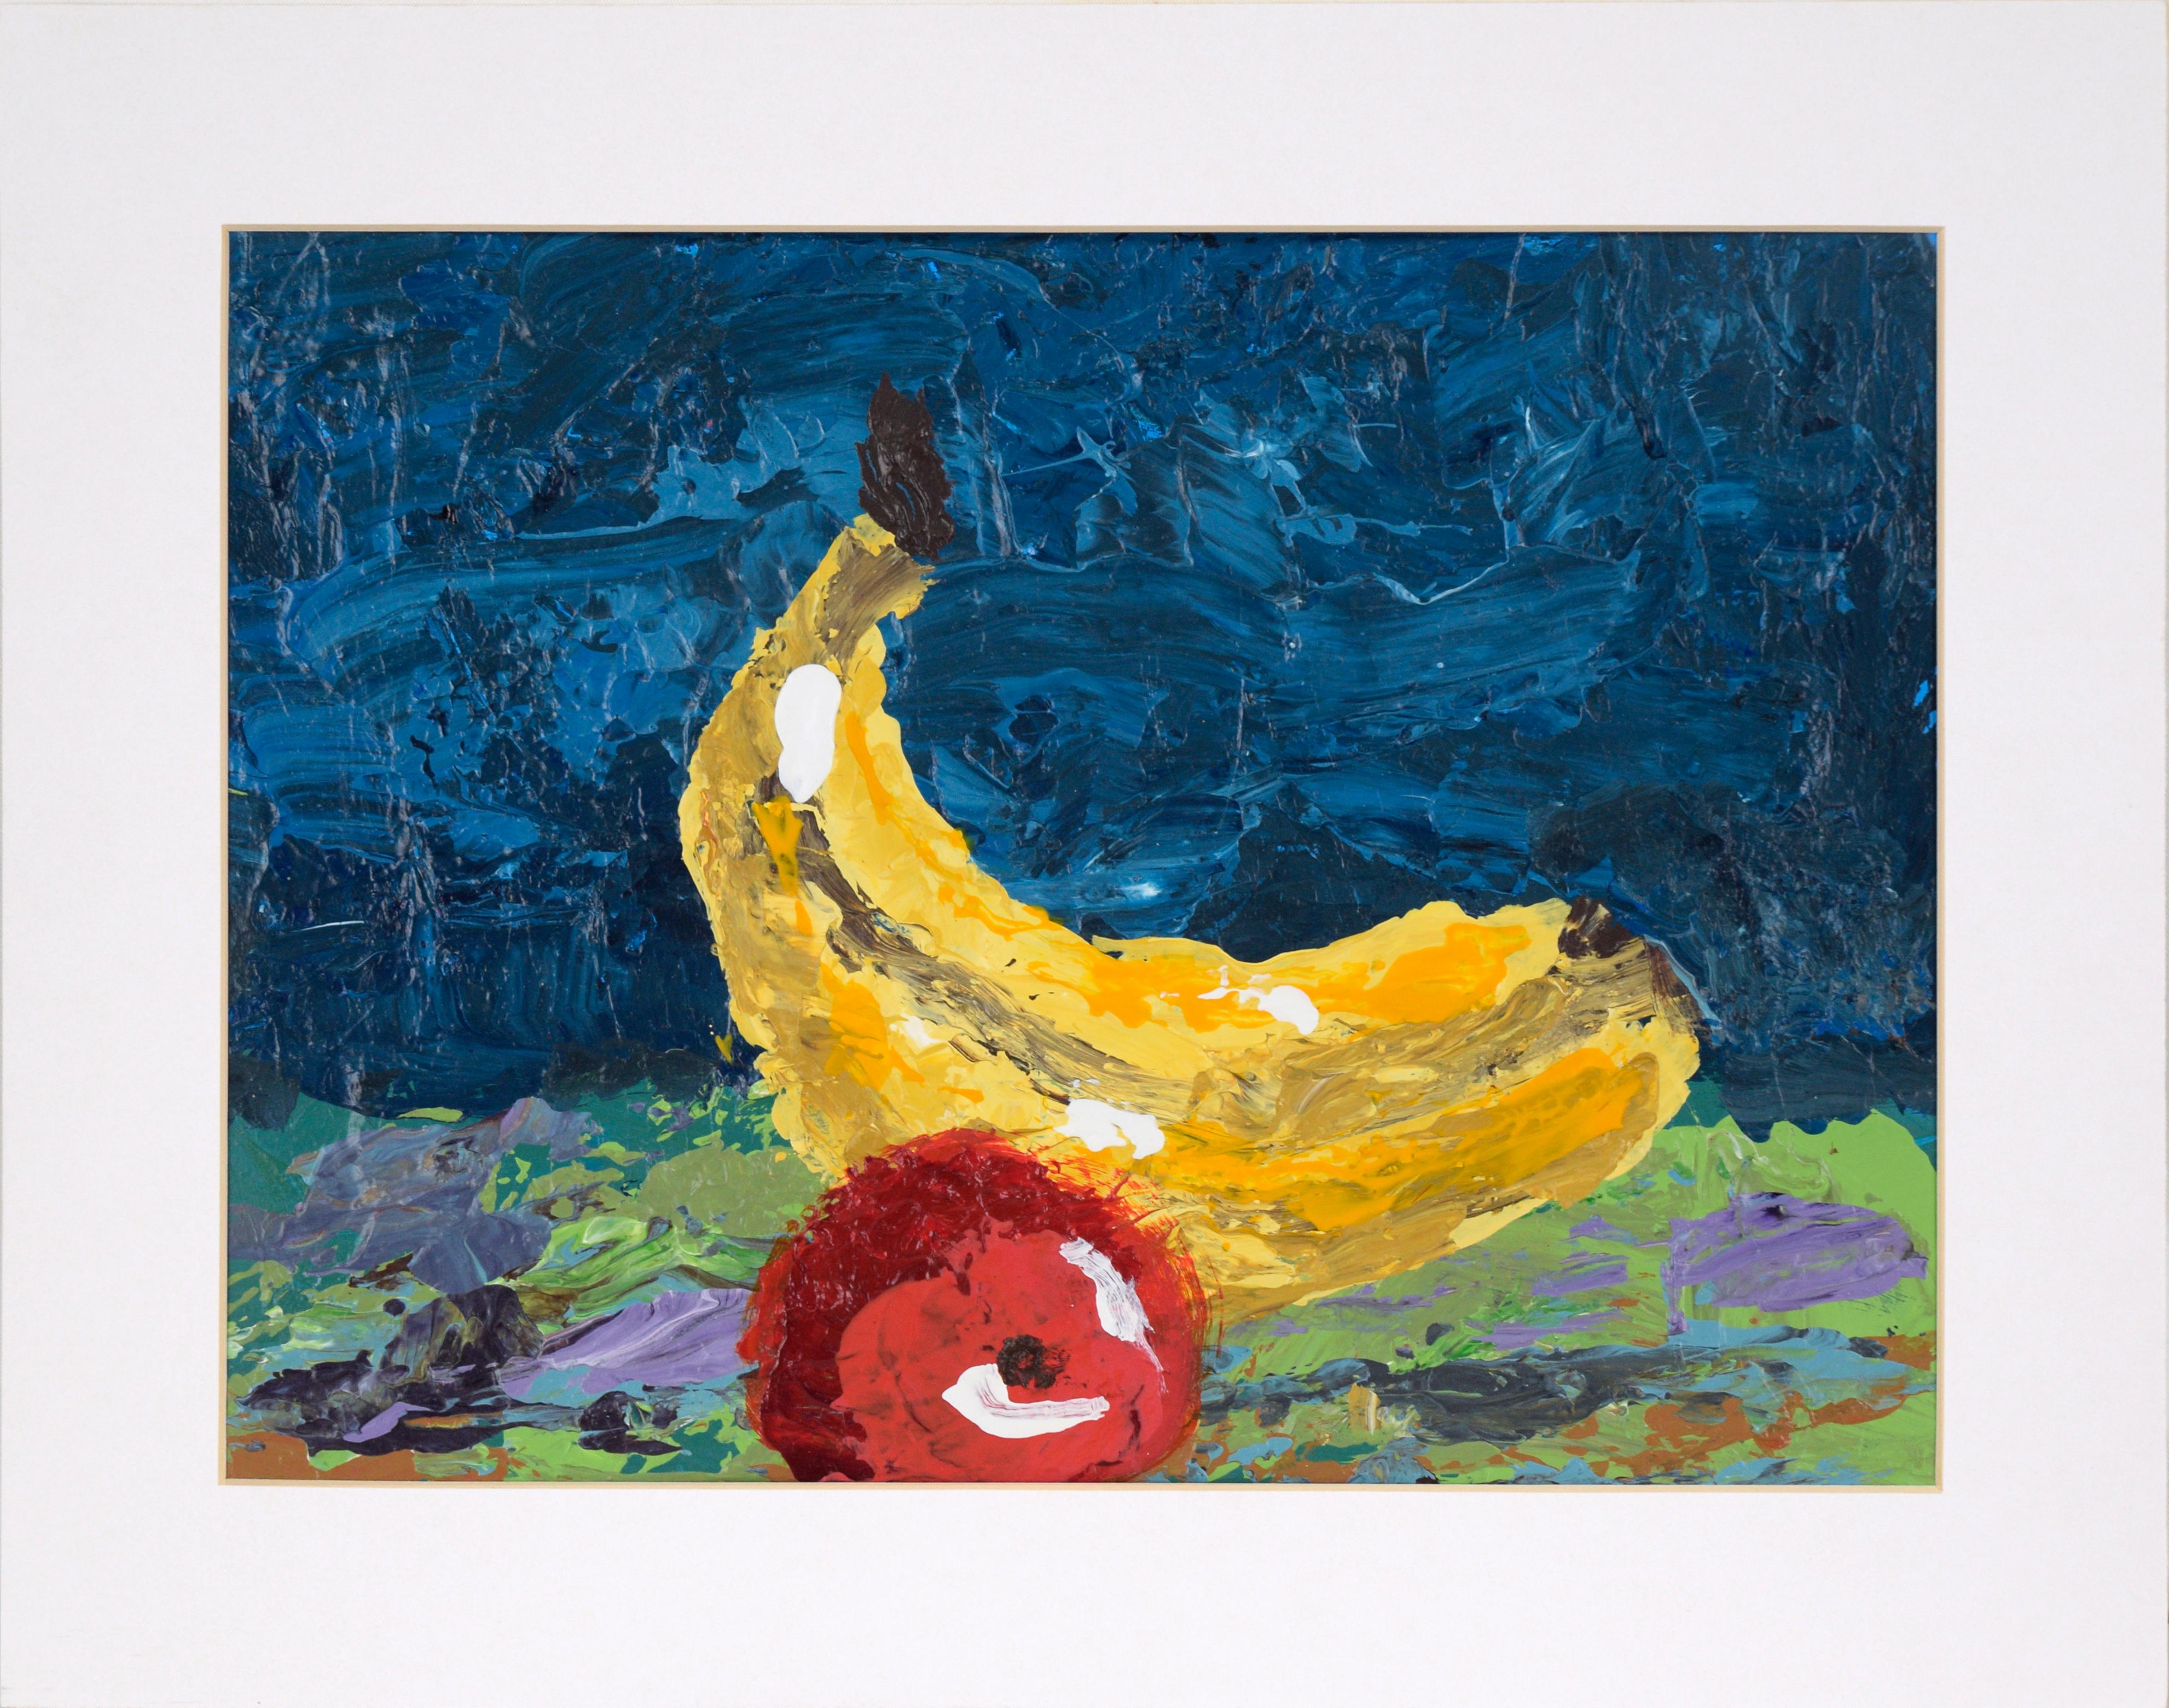 Diana Mallett Still-Life Painting - "Fruit" Still Life - Post-Impressionist Outsider Art - Acrylic on Heavy Paper